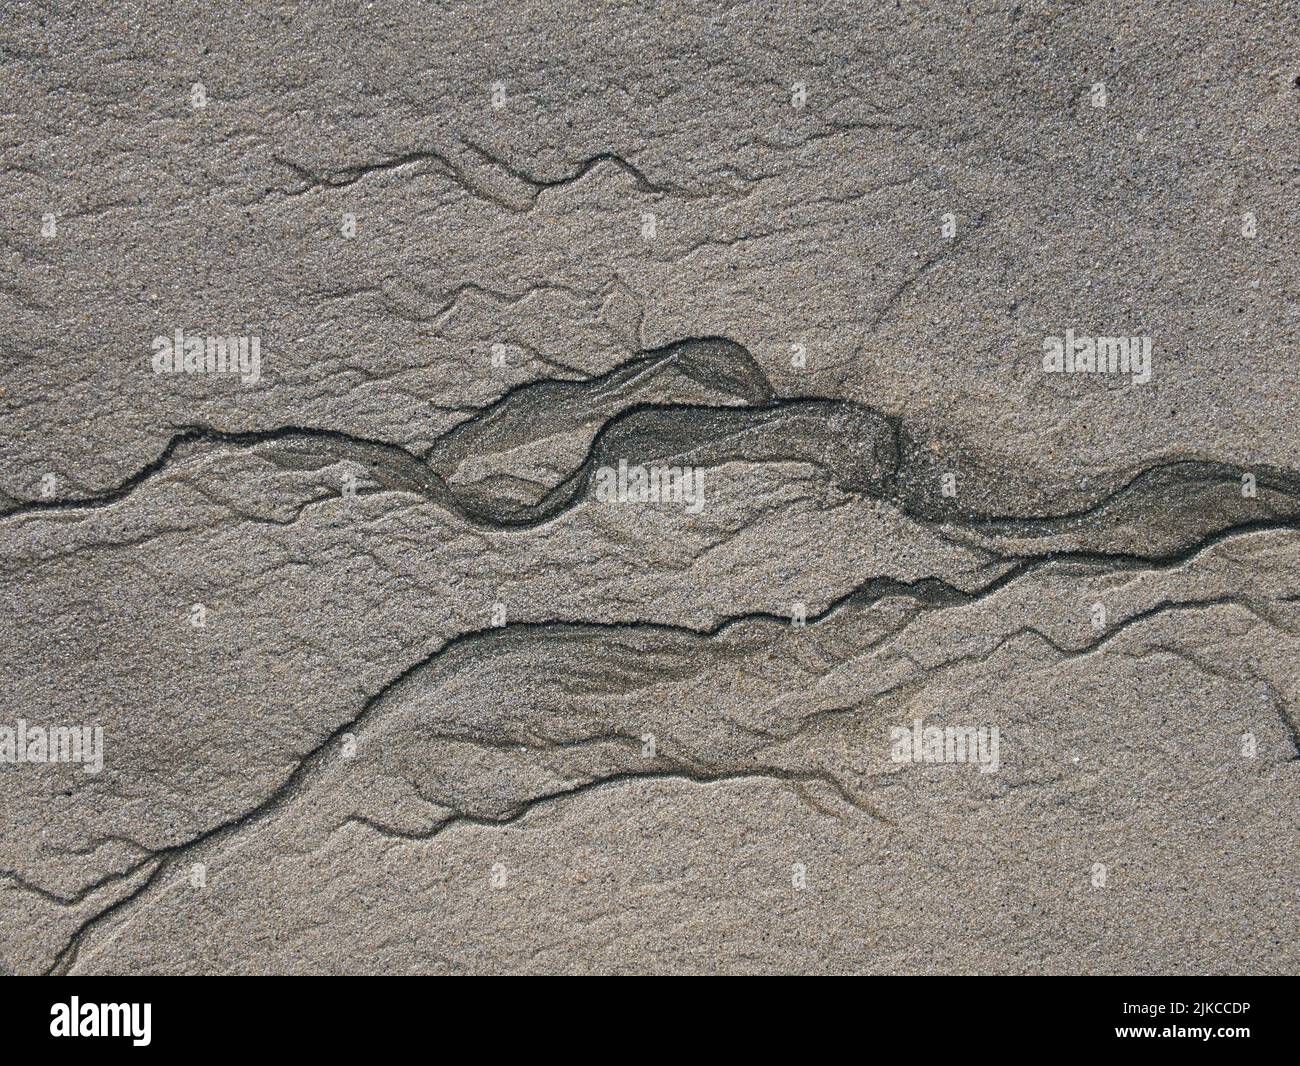 Rivuleti di acqua su una spiaggia di sabbia fine a bassa marea. Foto Stock